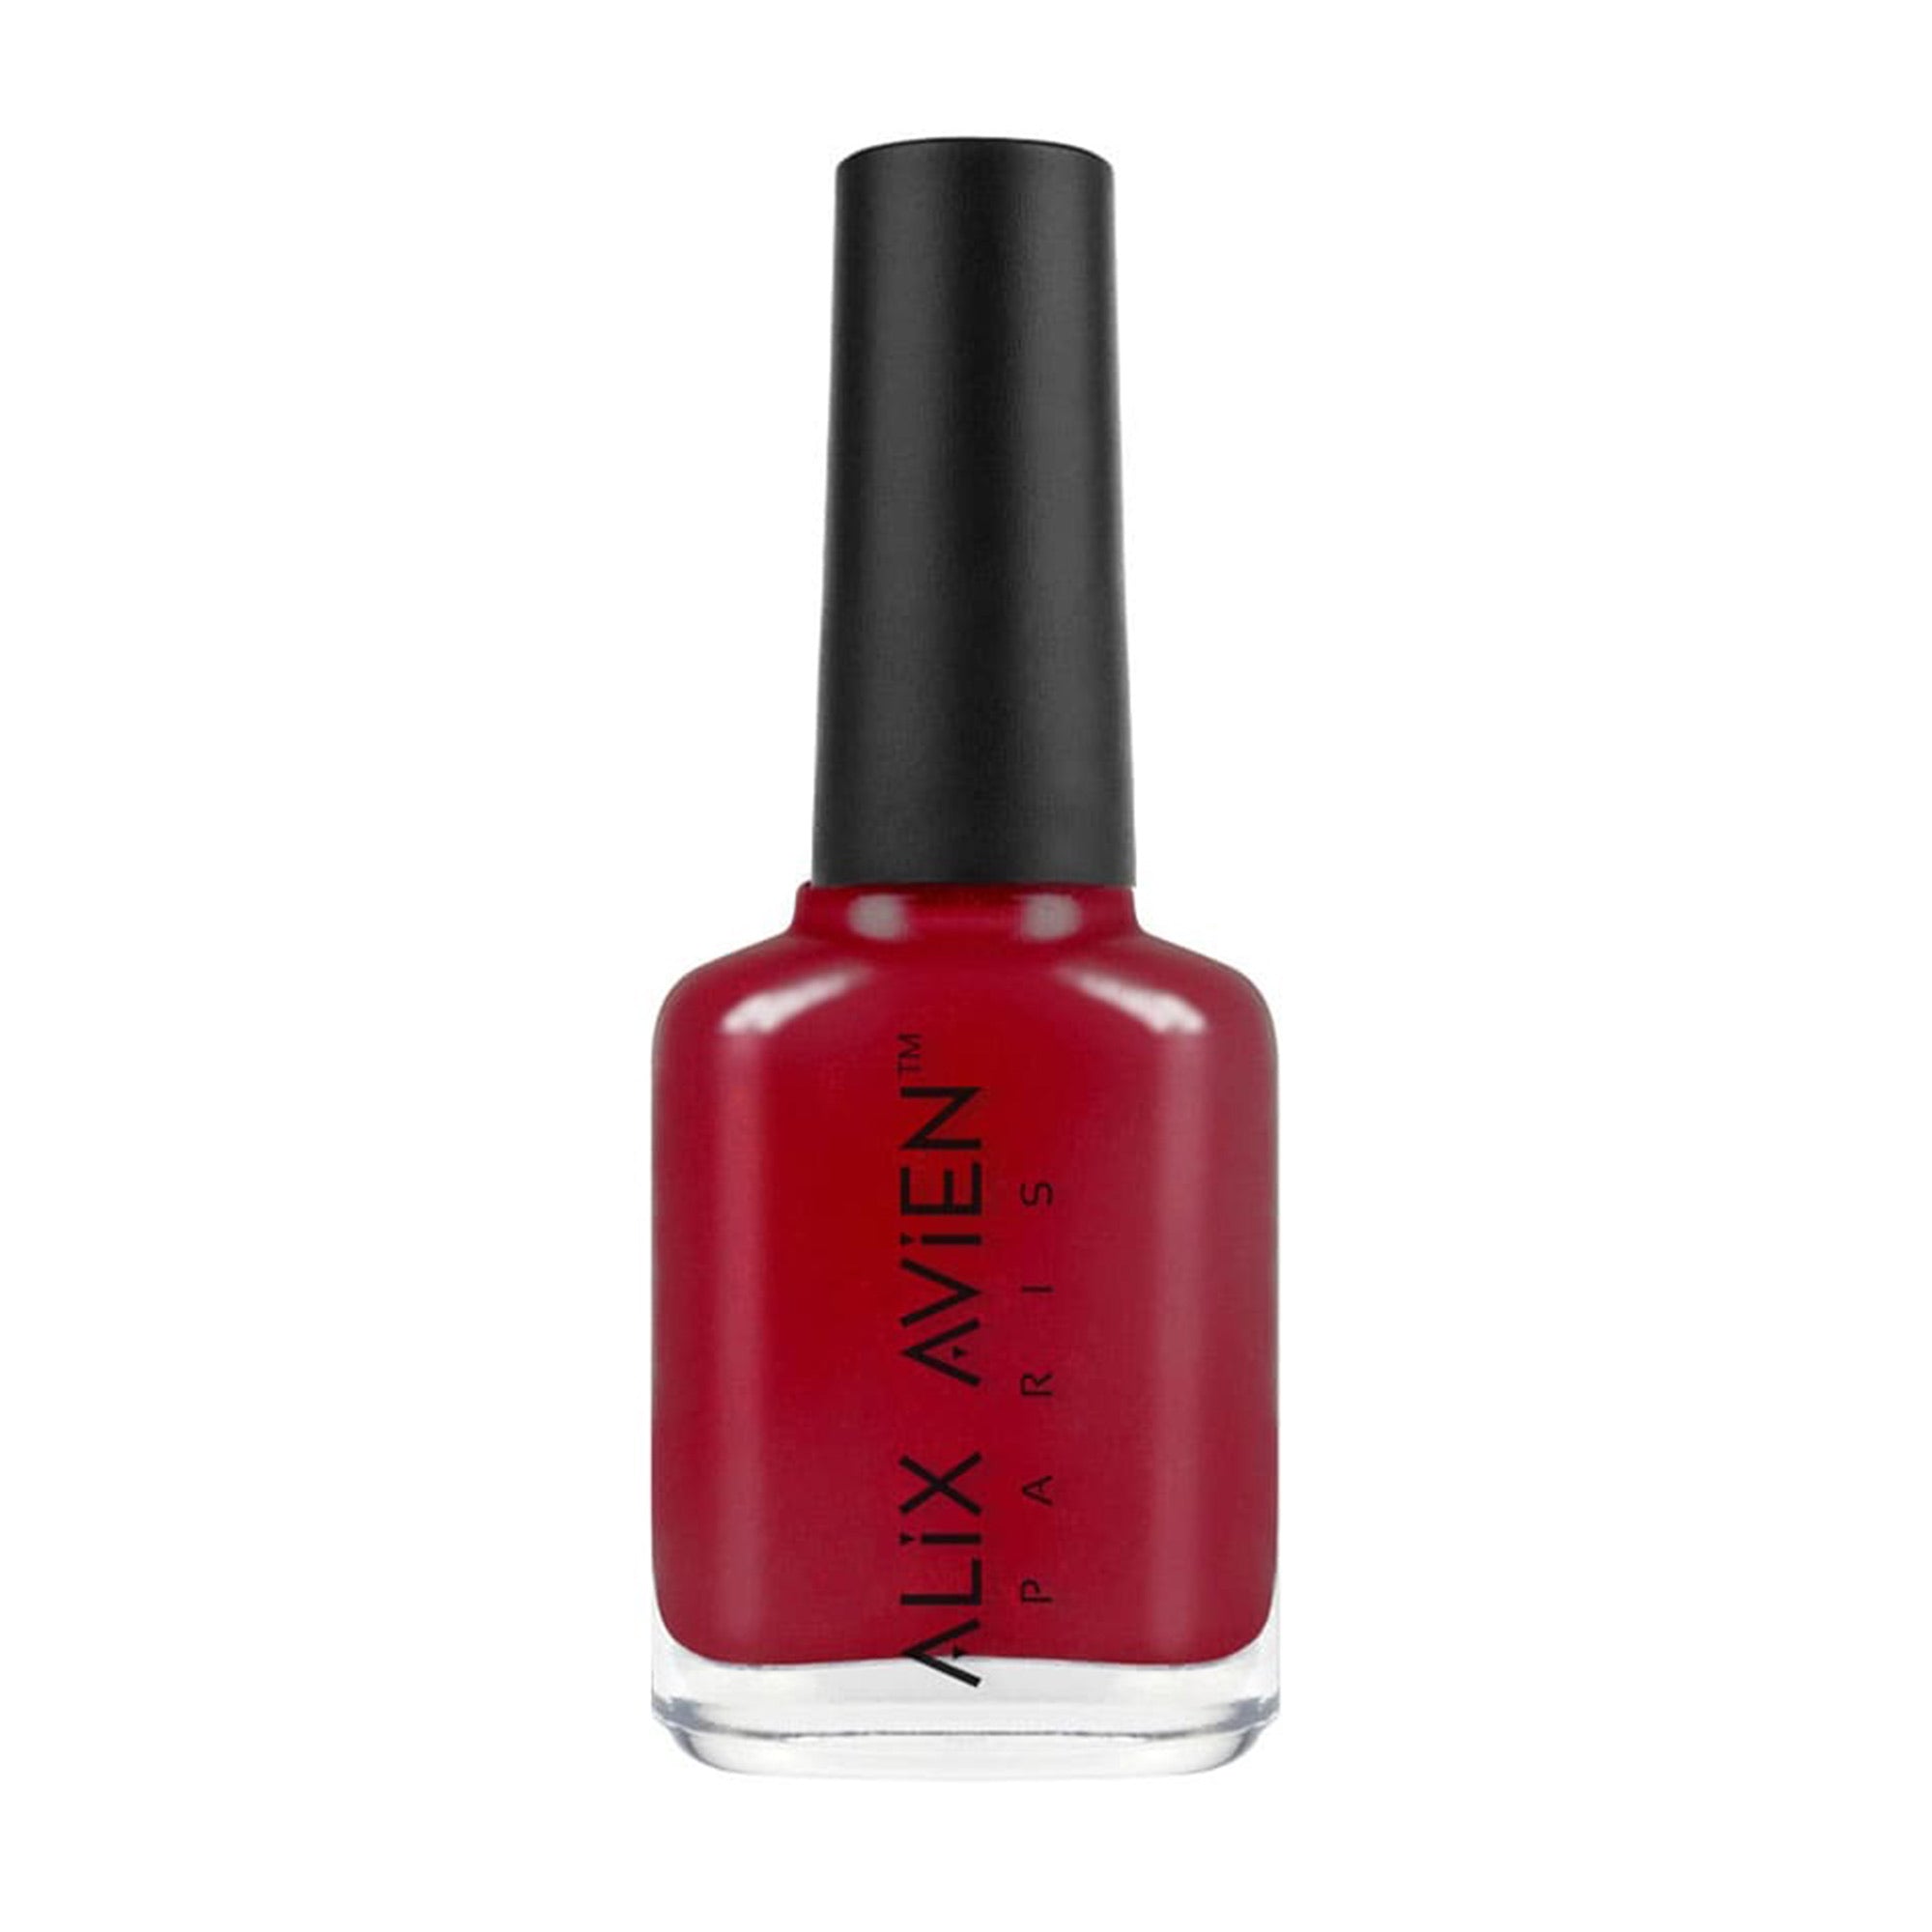 Alix Avien - Nail Polish No.105 (Metallic Red)